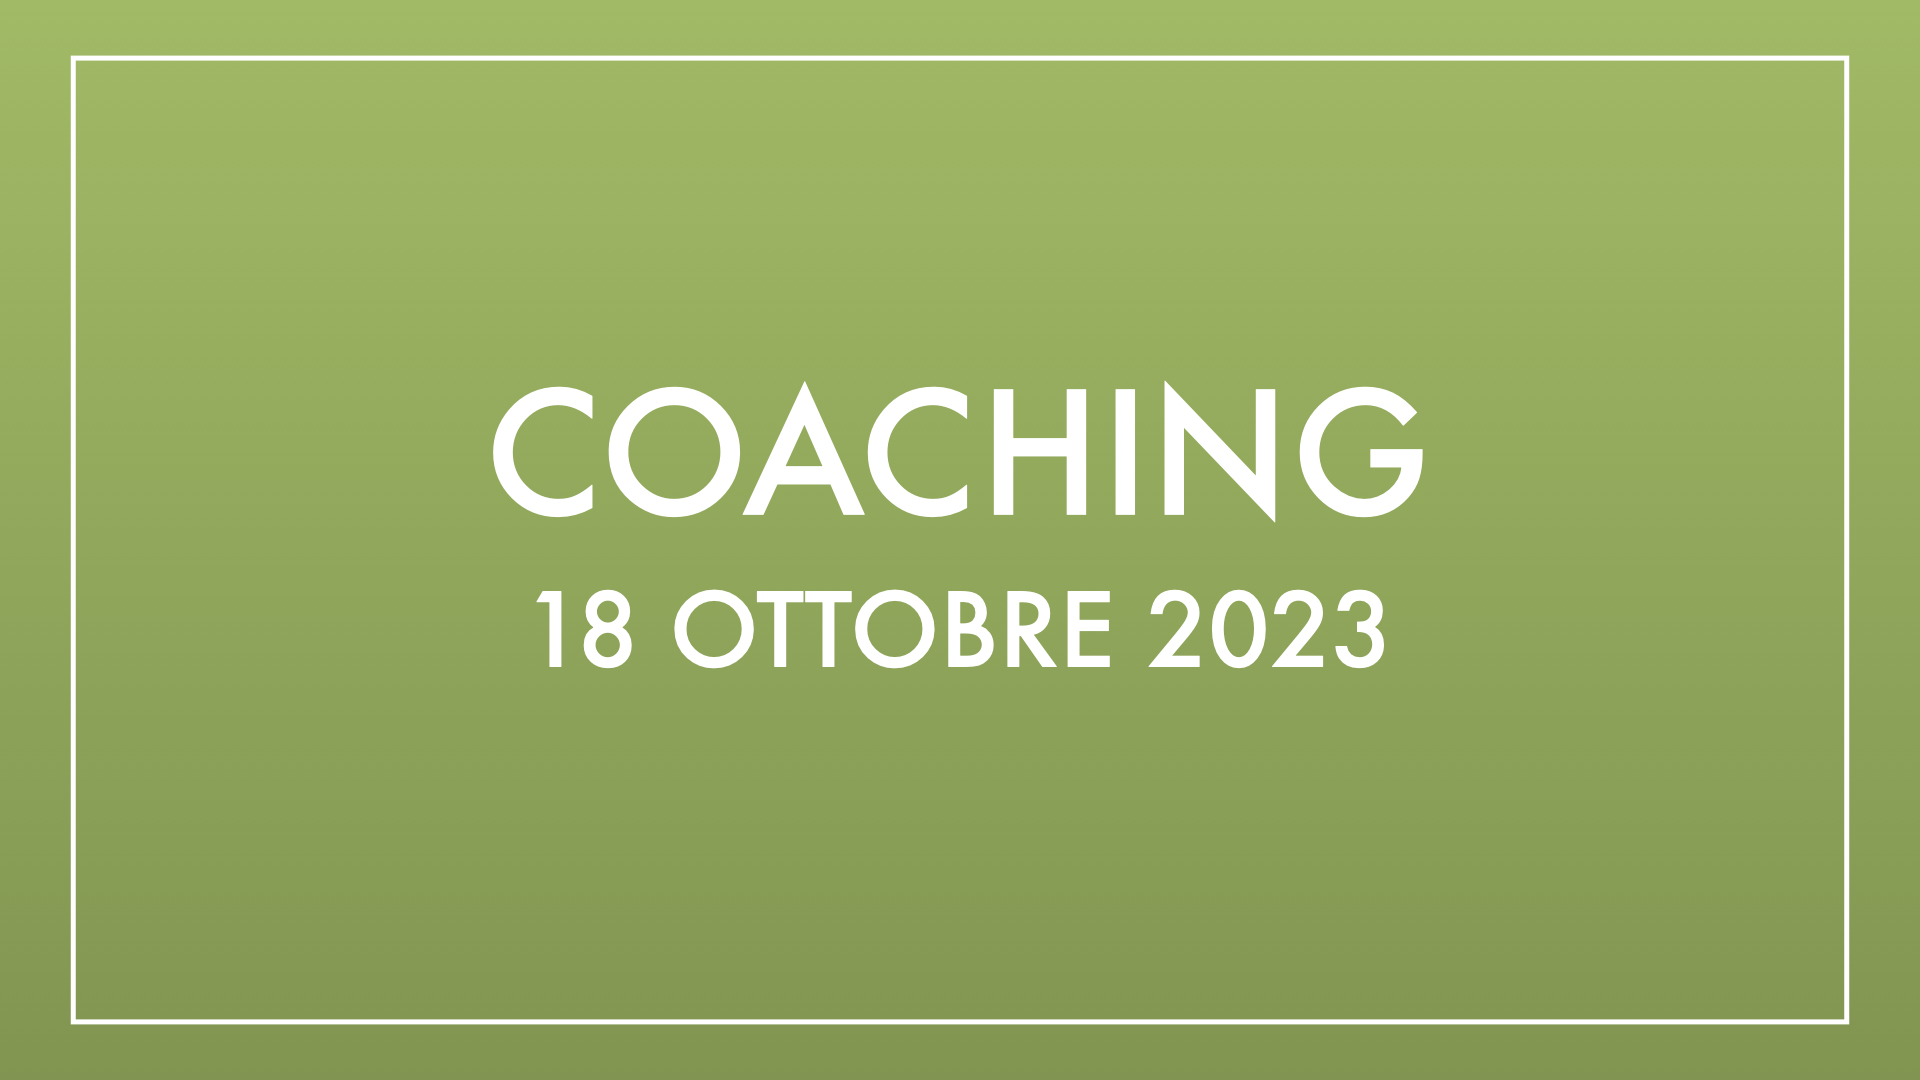 Coaching 18 ottobre 2023